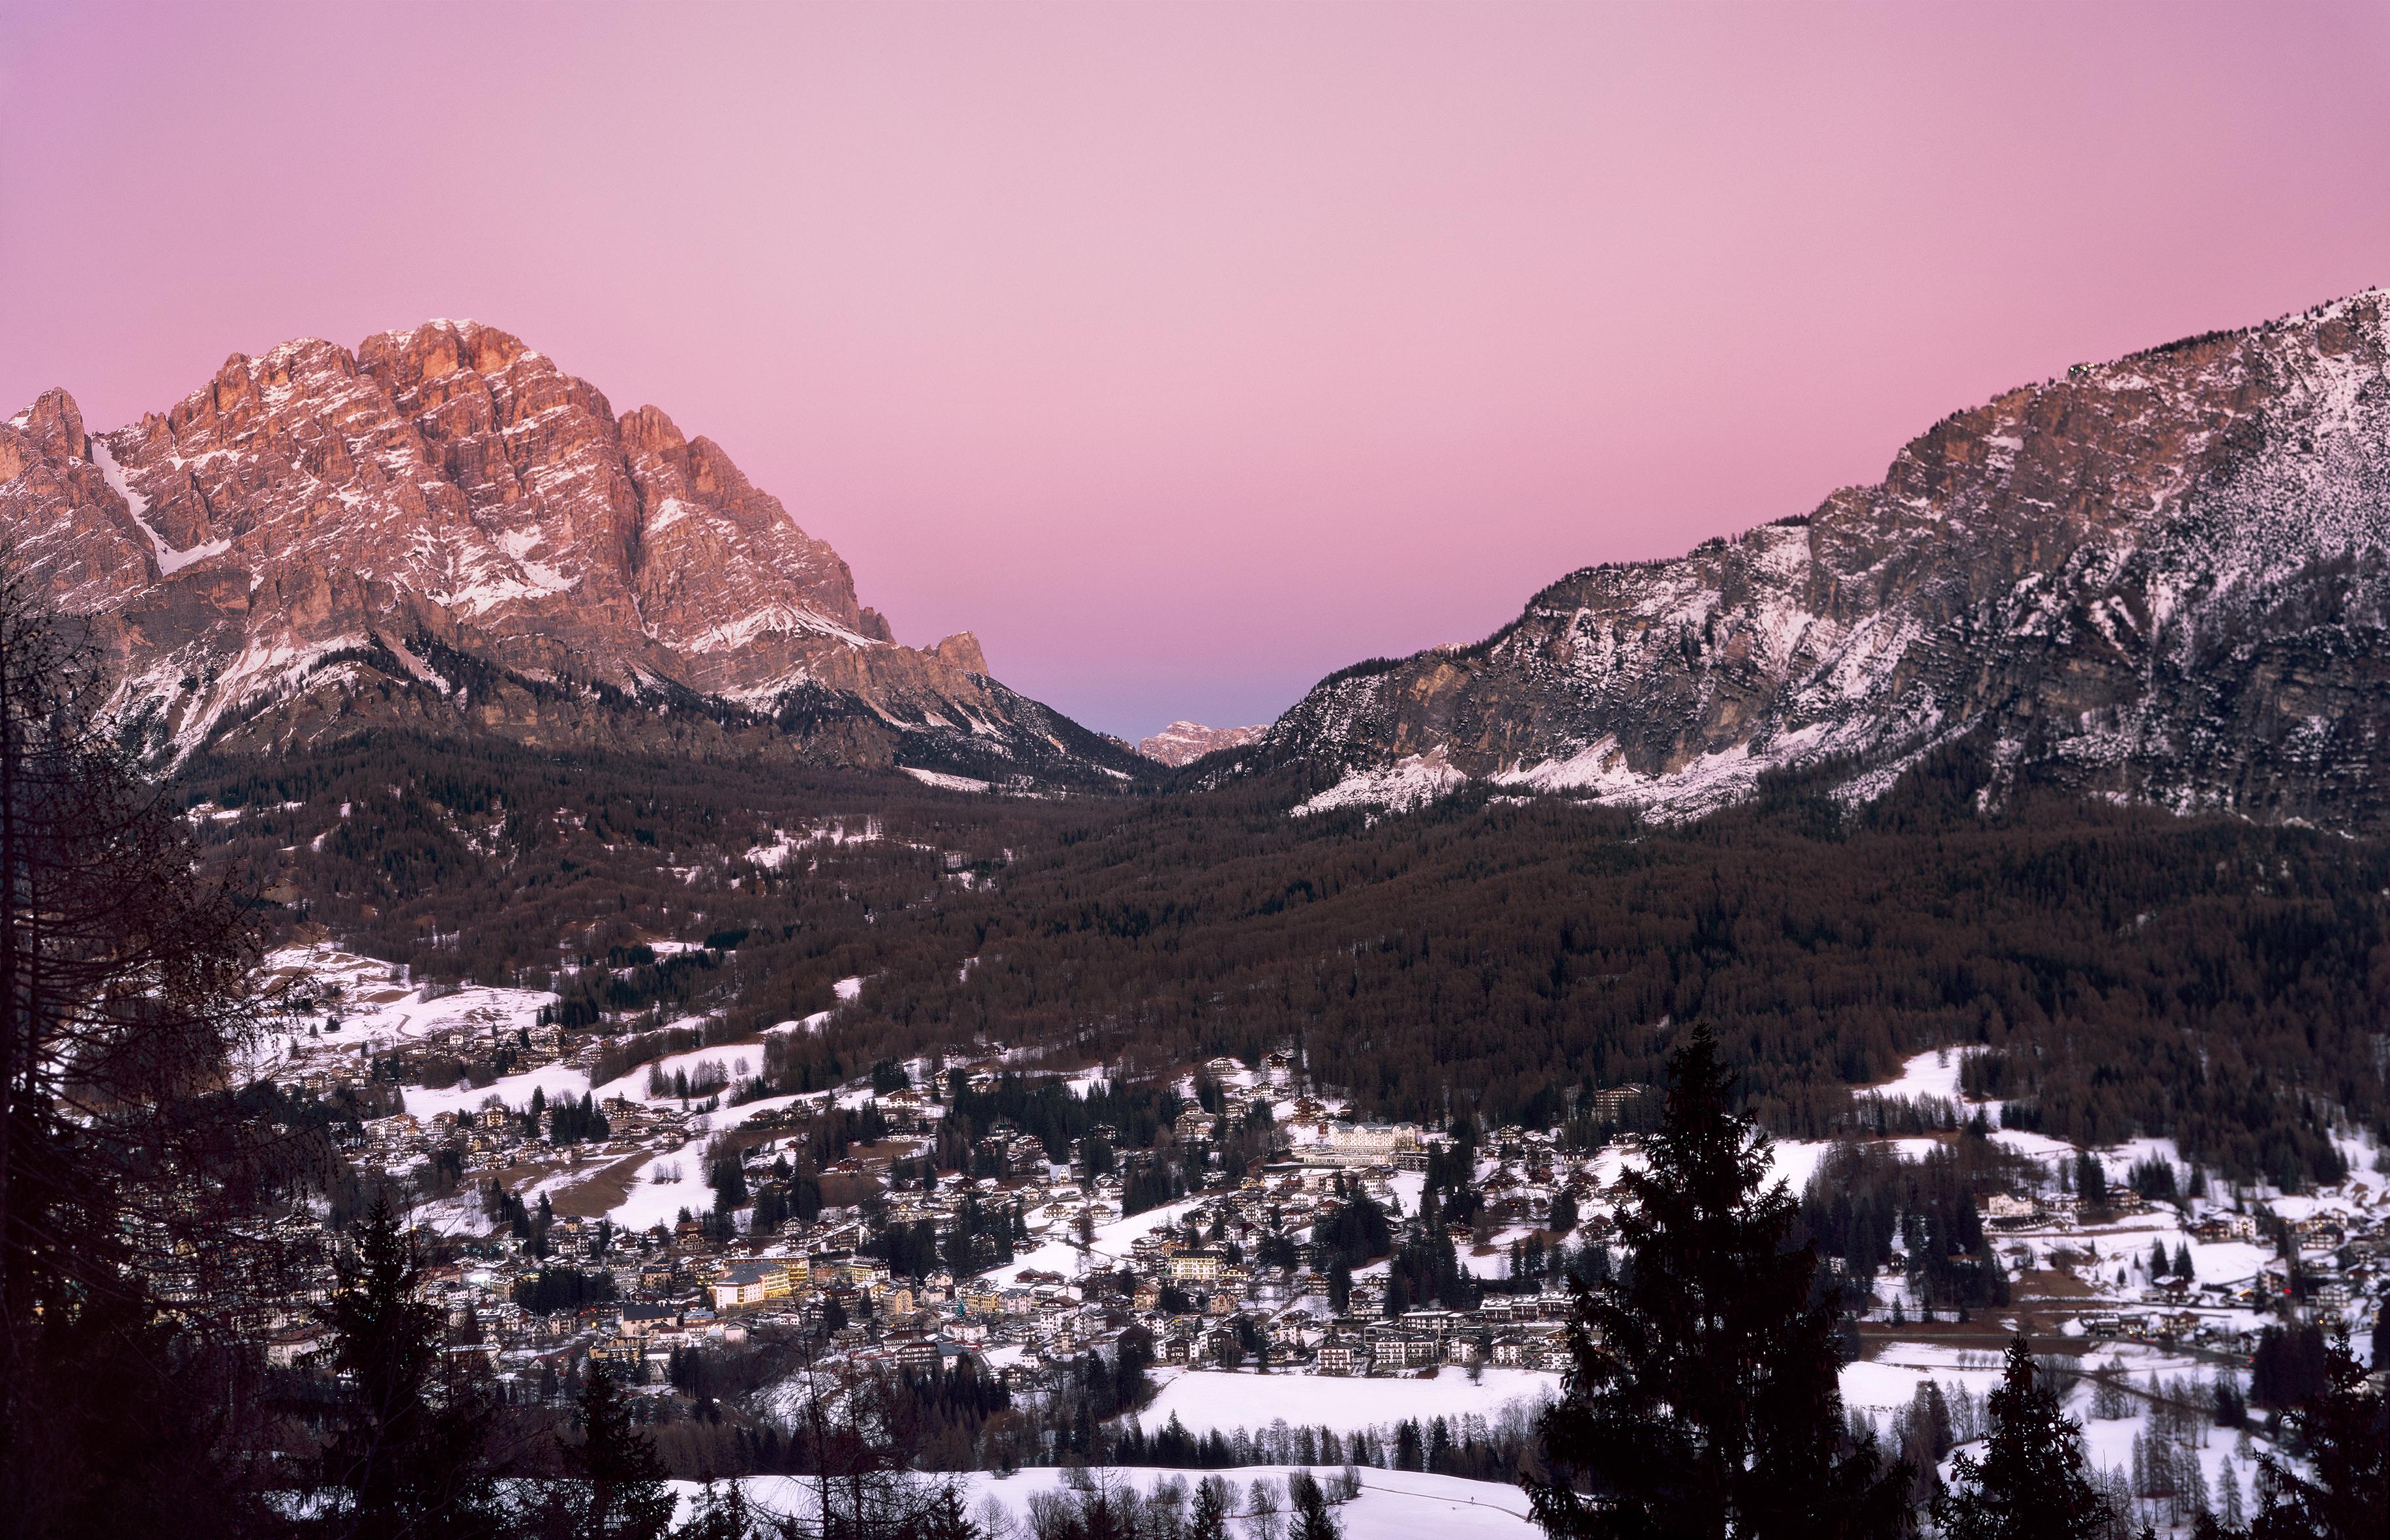 Ugne Pouwell Landscape Photograph - Cortina d'Ampezzo - Analogue Sunset Photography of Italian Dolomite mountains